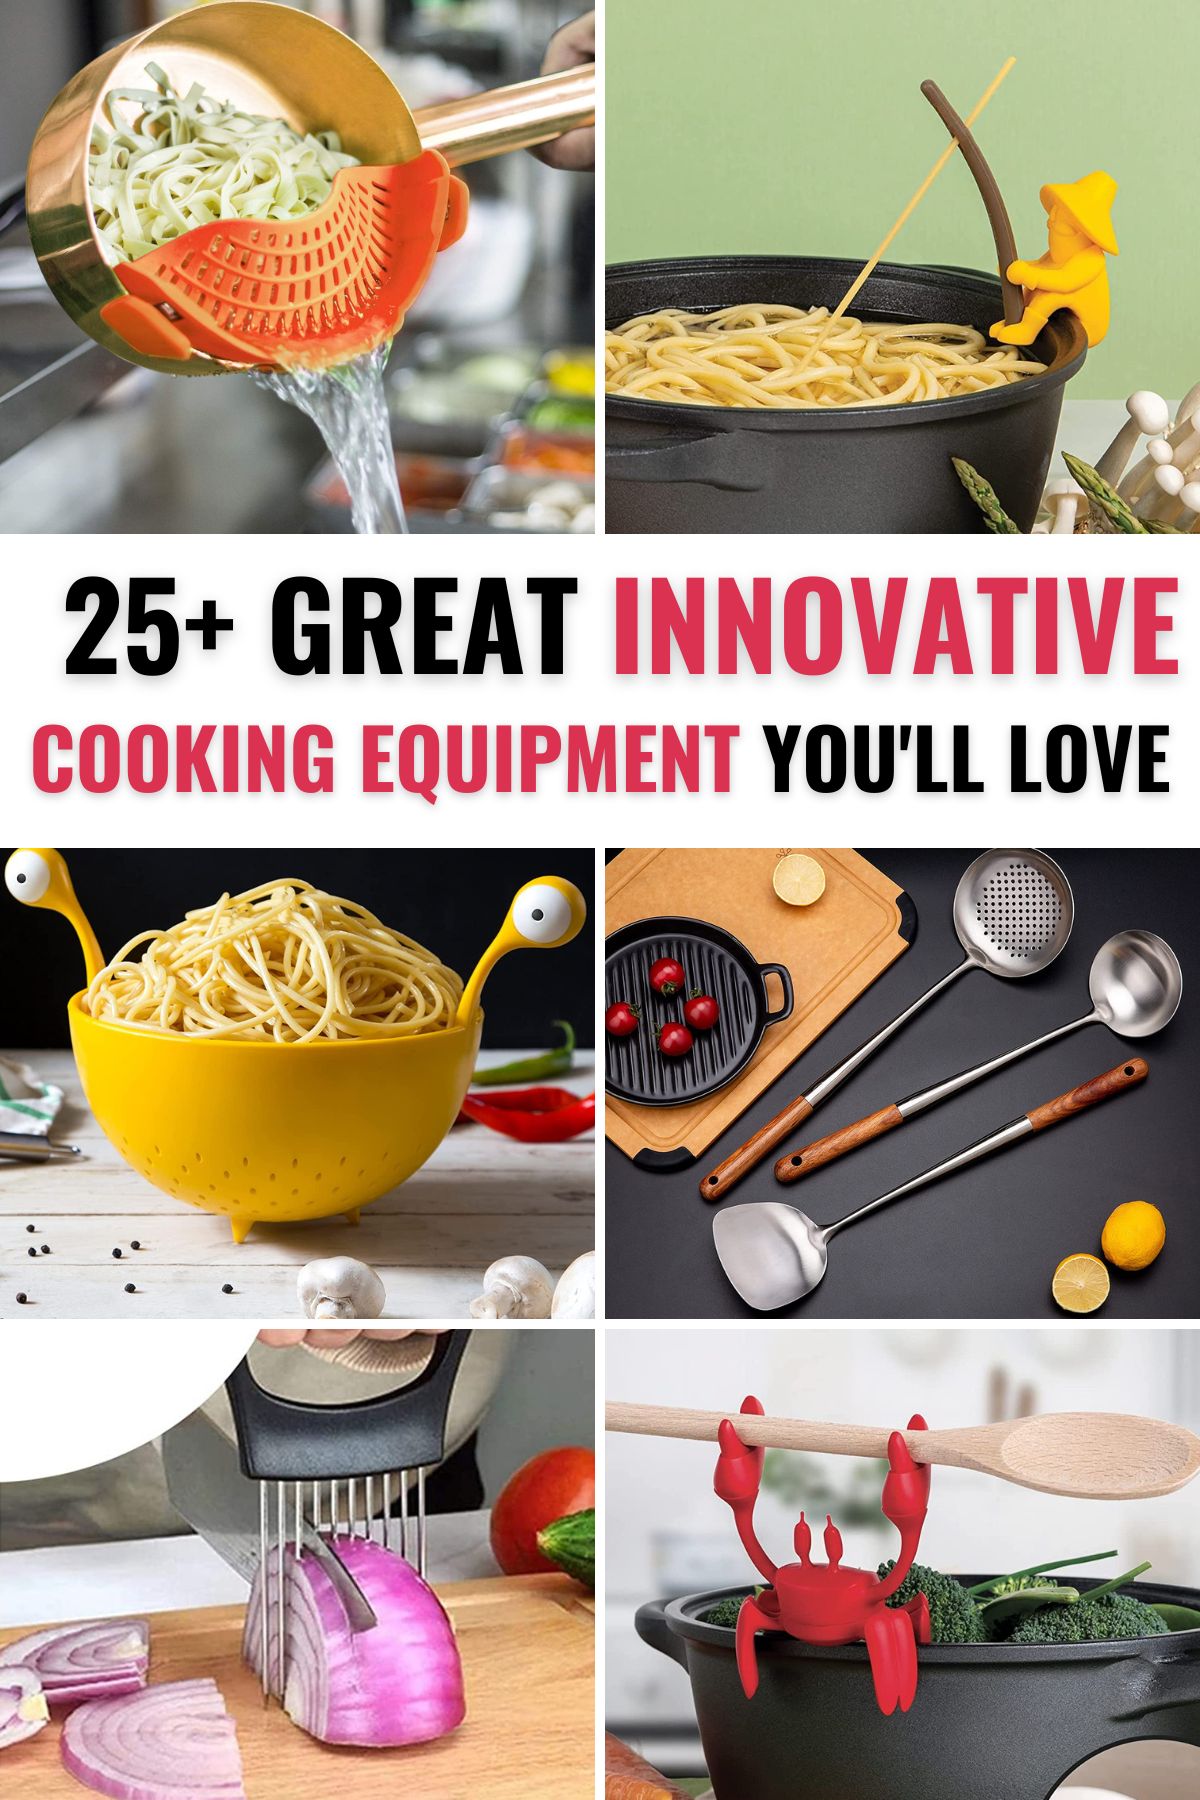 https://www.itisakeeper.com/wp-content/uploads/2022/11/Innovative-Cooking-Equipment-HERO-IAK.jpg